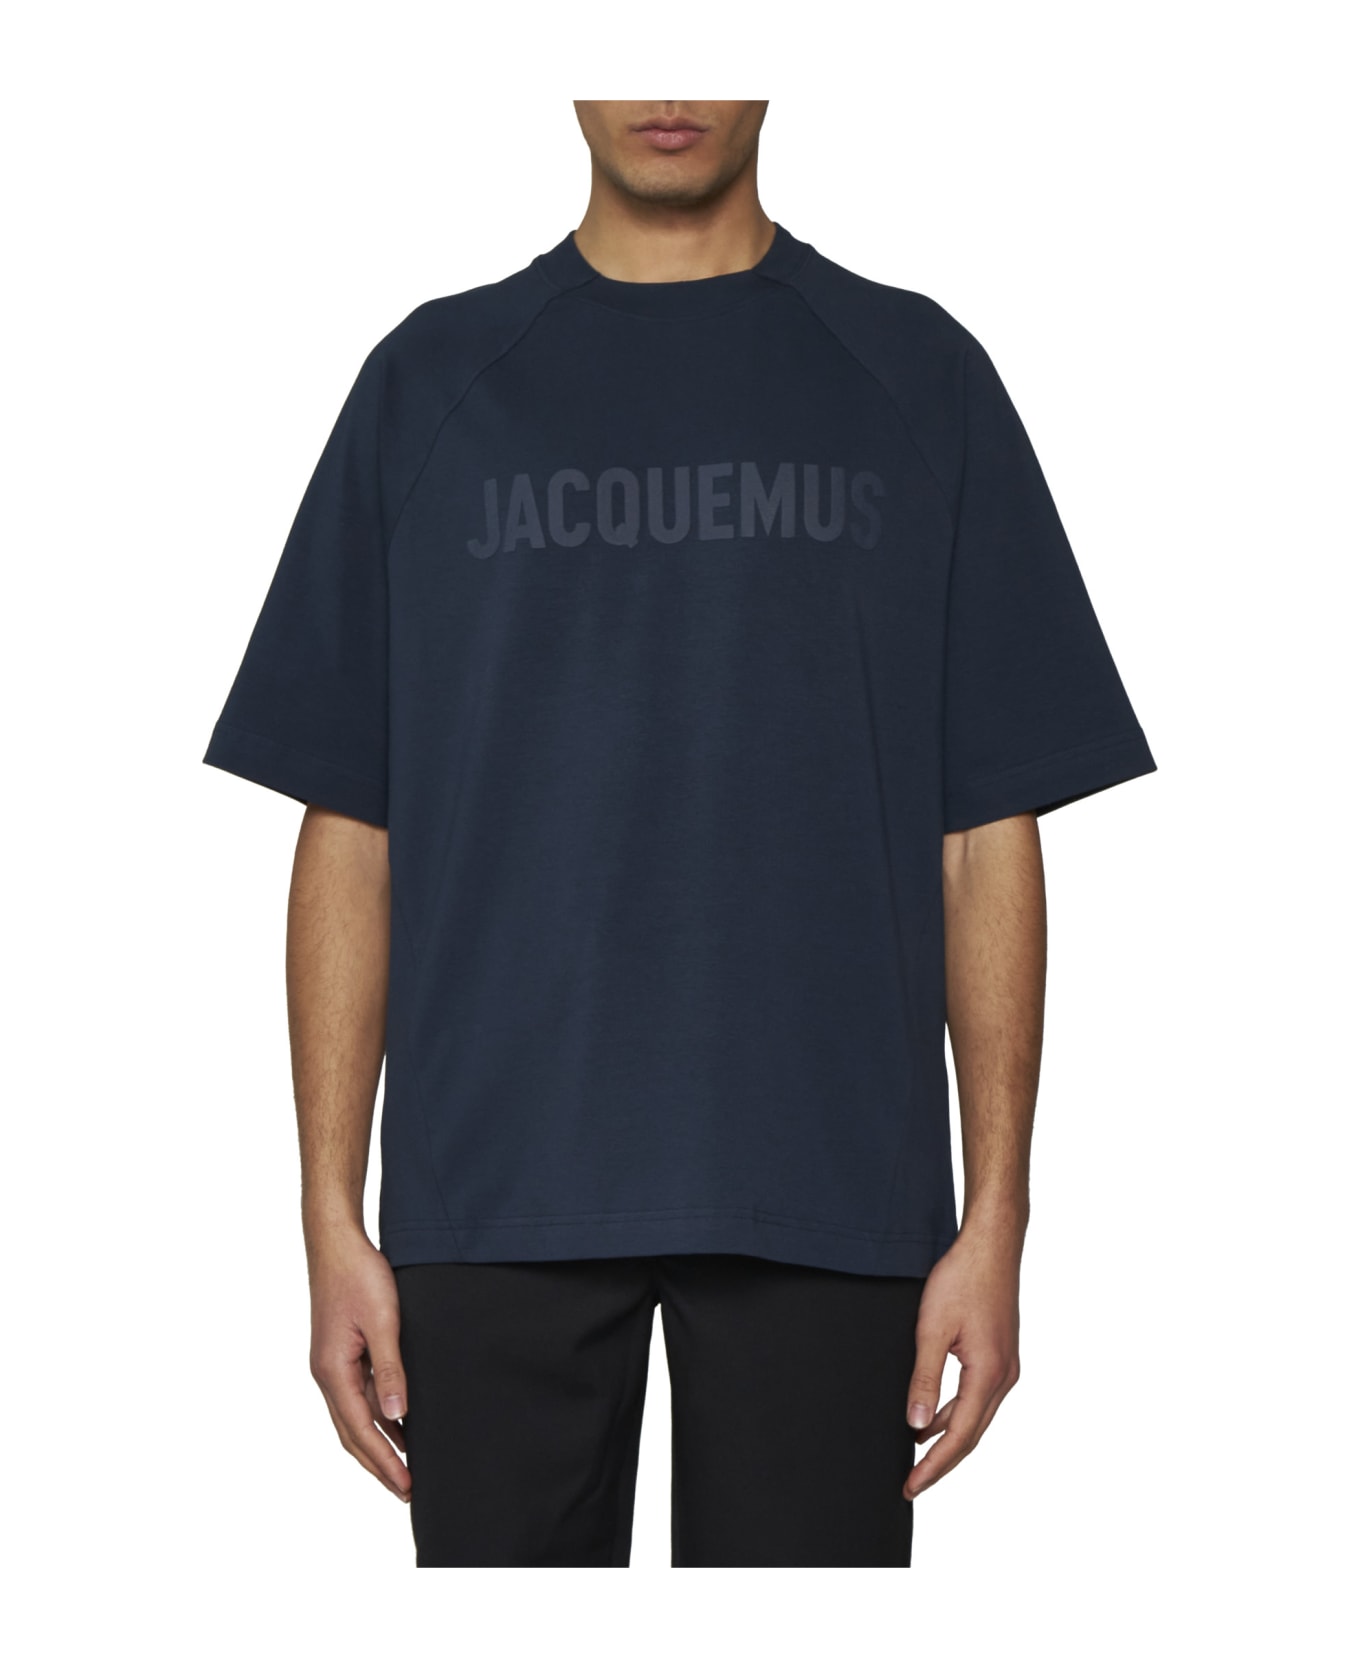 Jacquemus Typo Crewneck T-shirt - Dark navy Tシャツ